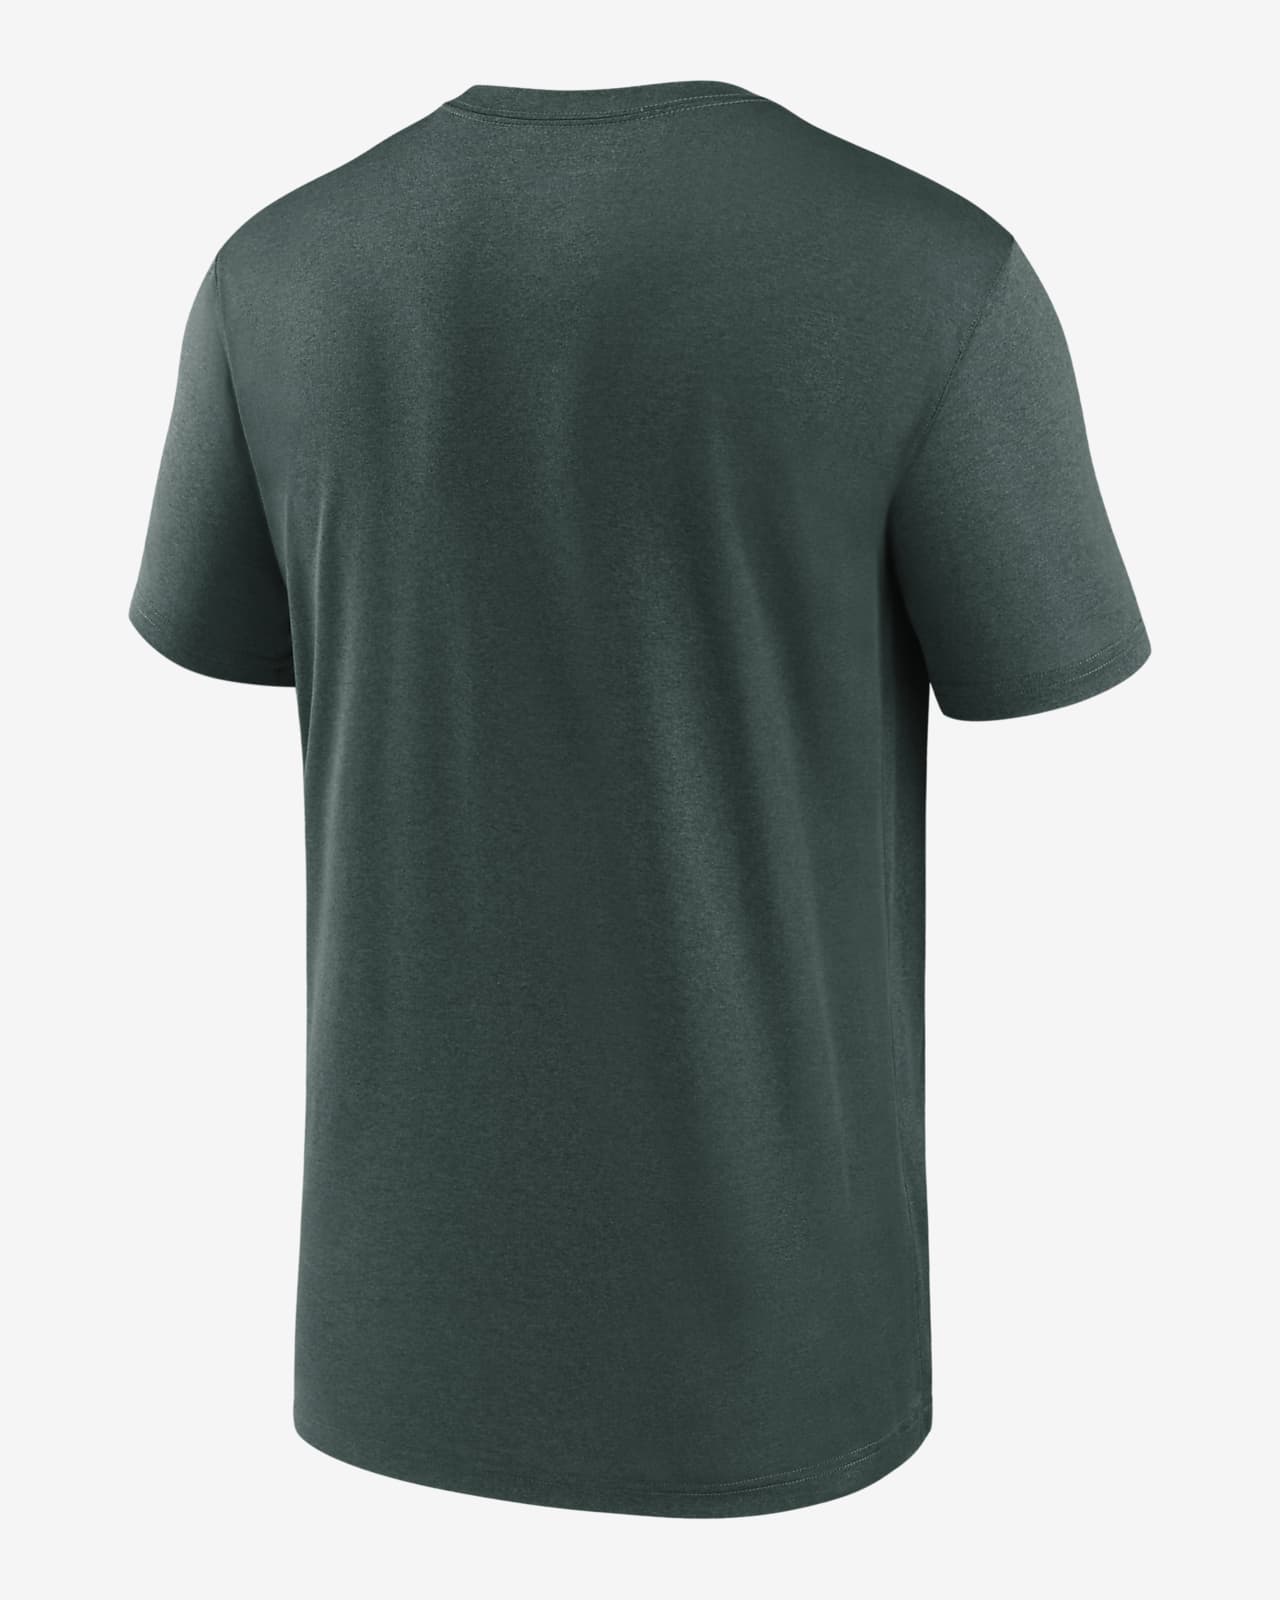 Nike Dri-FIT City Connect Logo (MLB Colorado Rockies) Men's T-Shirt